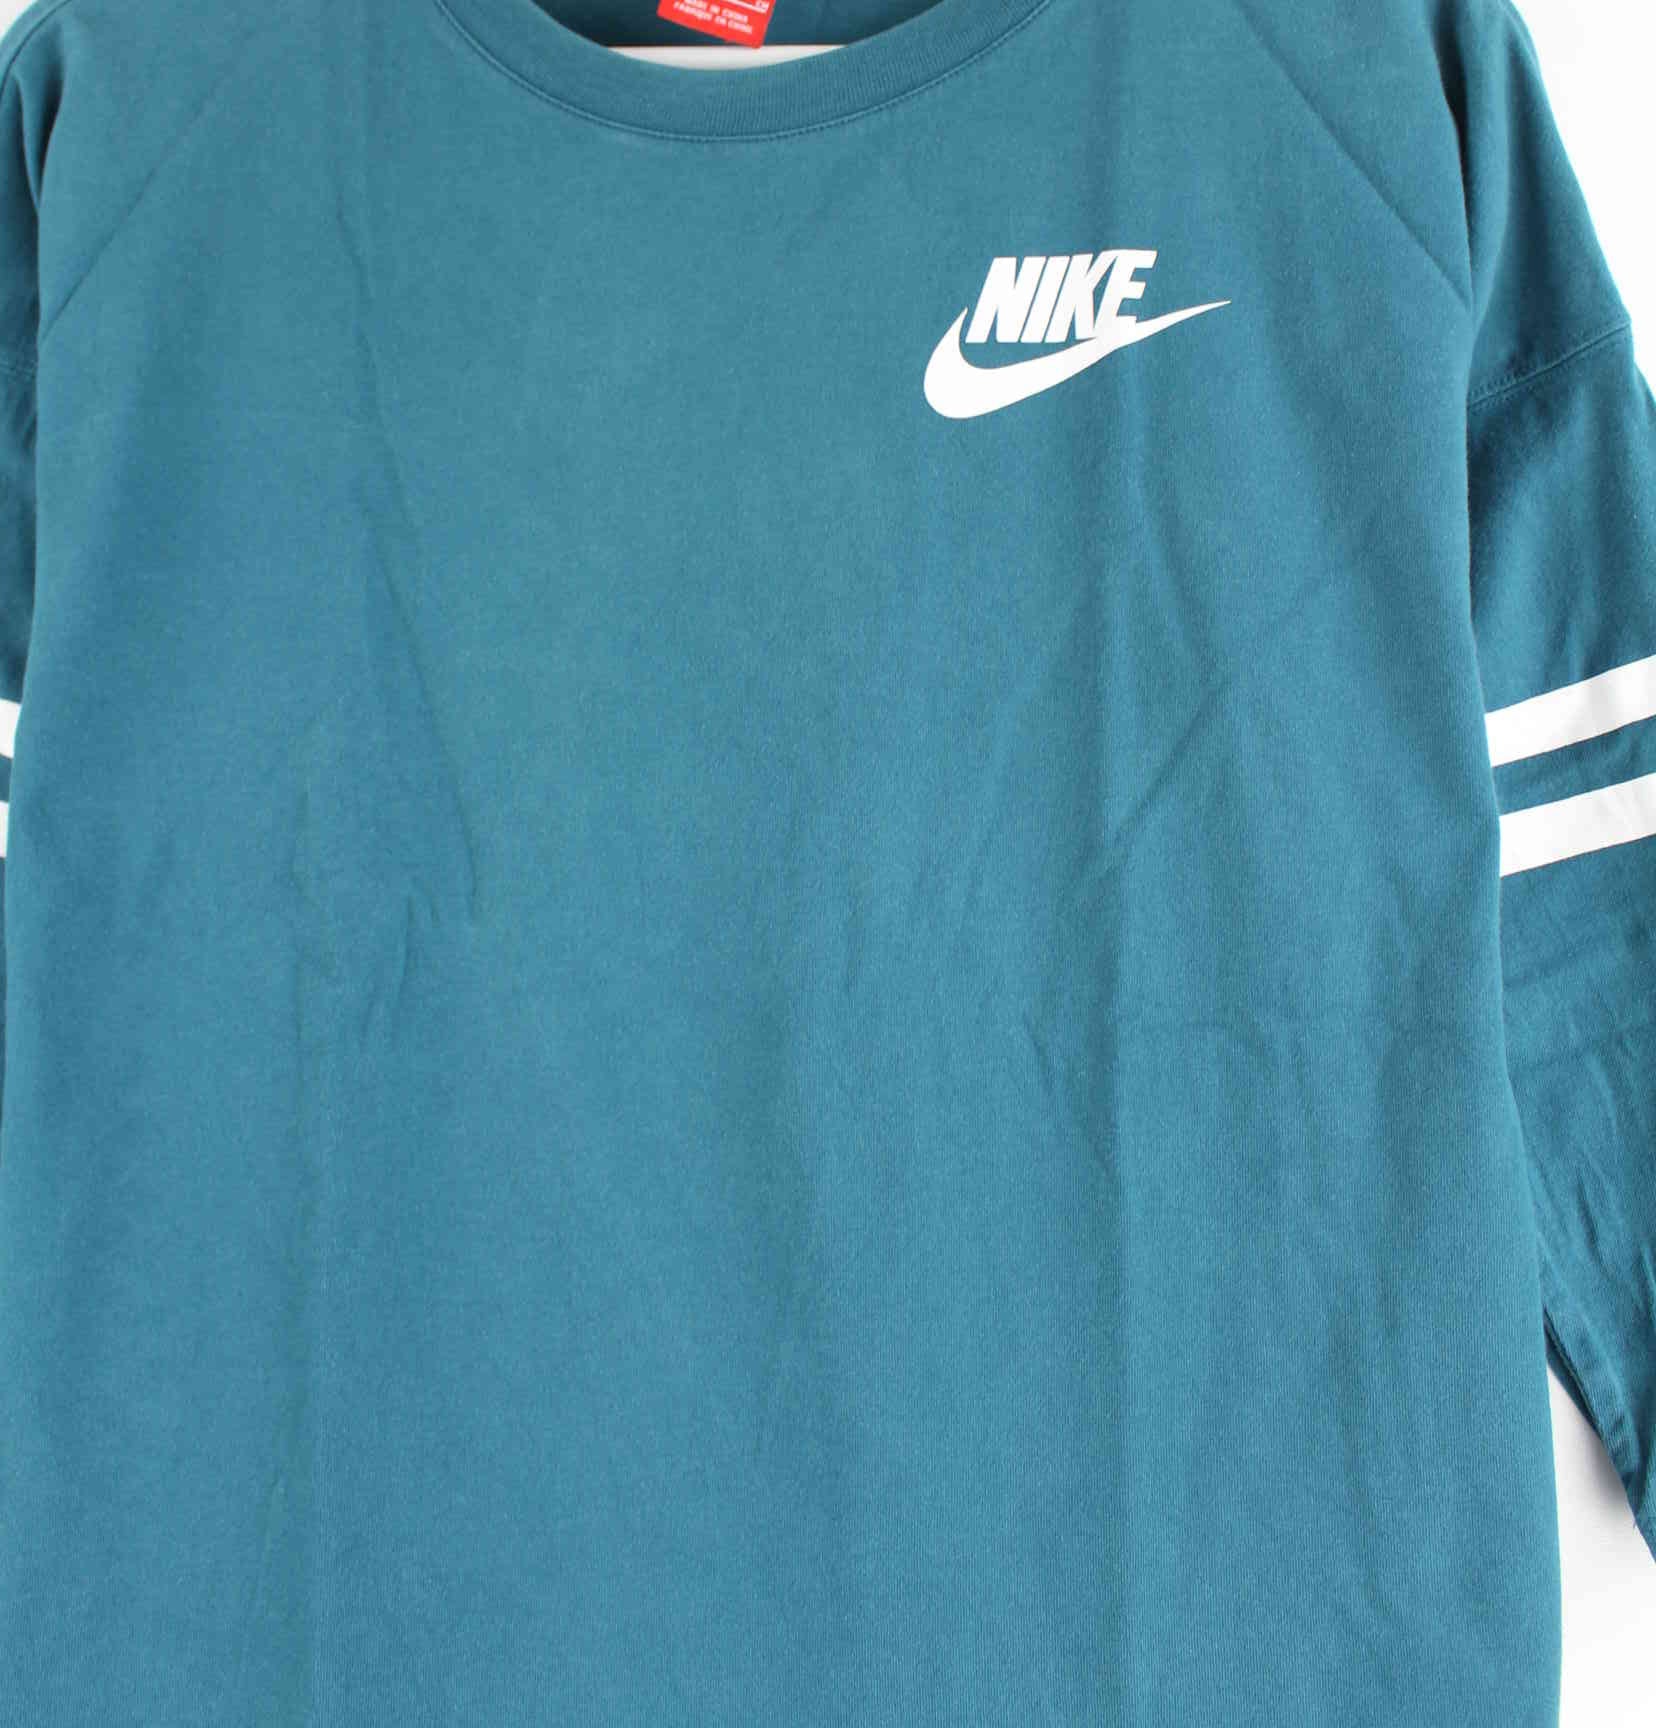 Nike Damen Just Do It Print Kurzarm Sweatshirt Grün S (detail image 1)